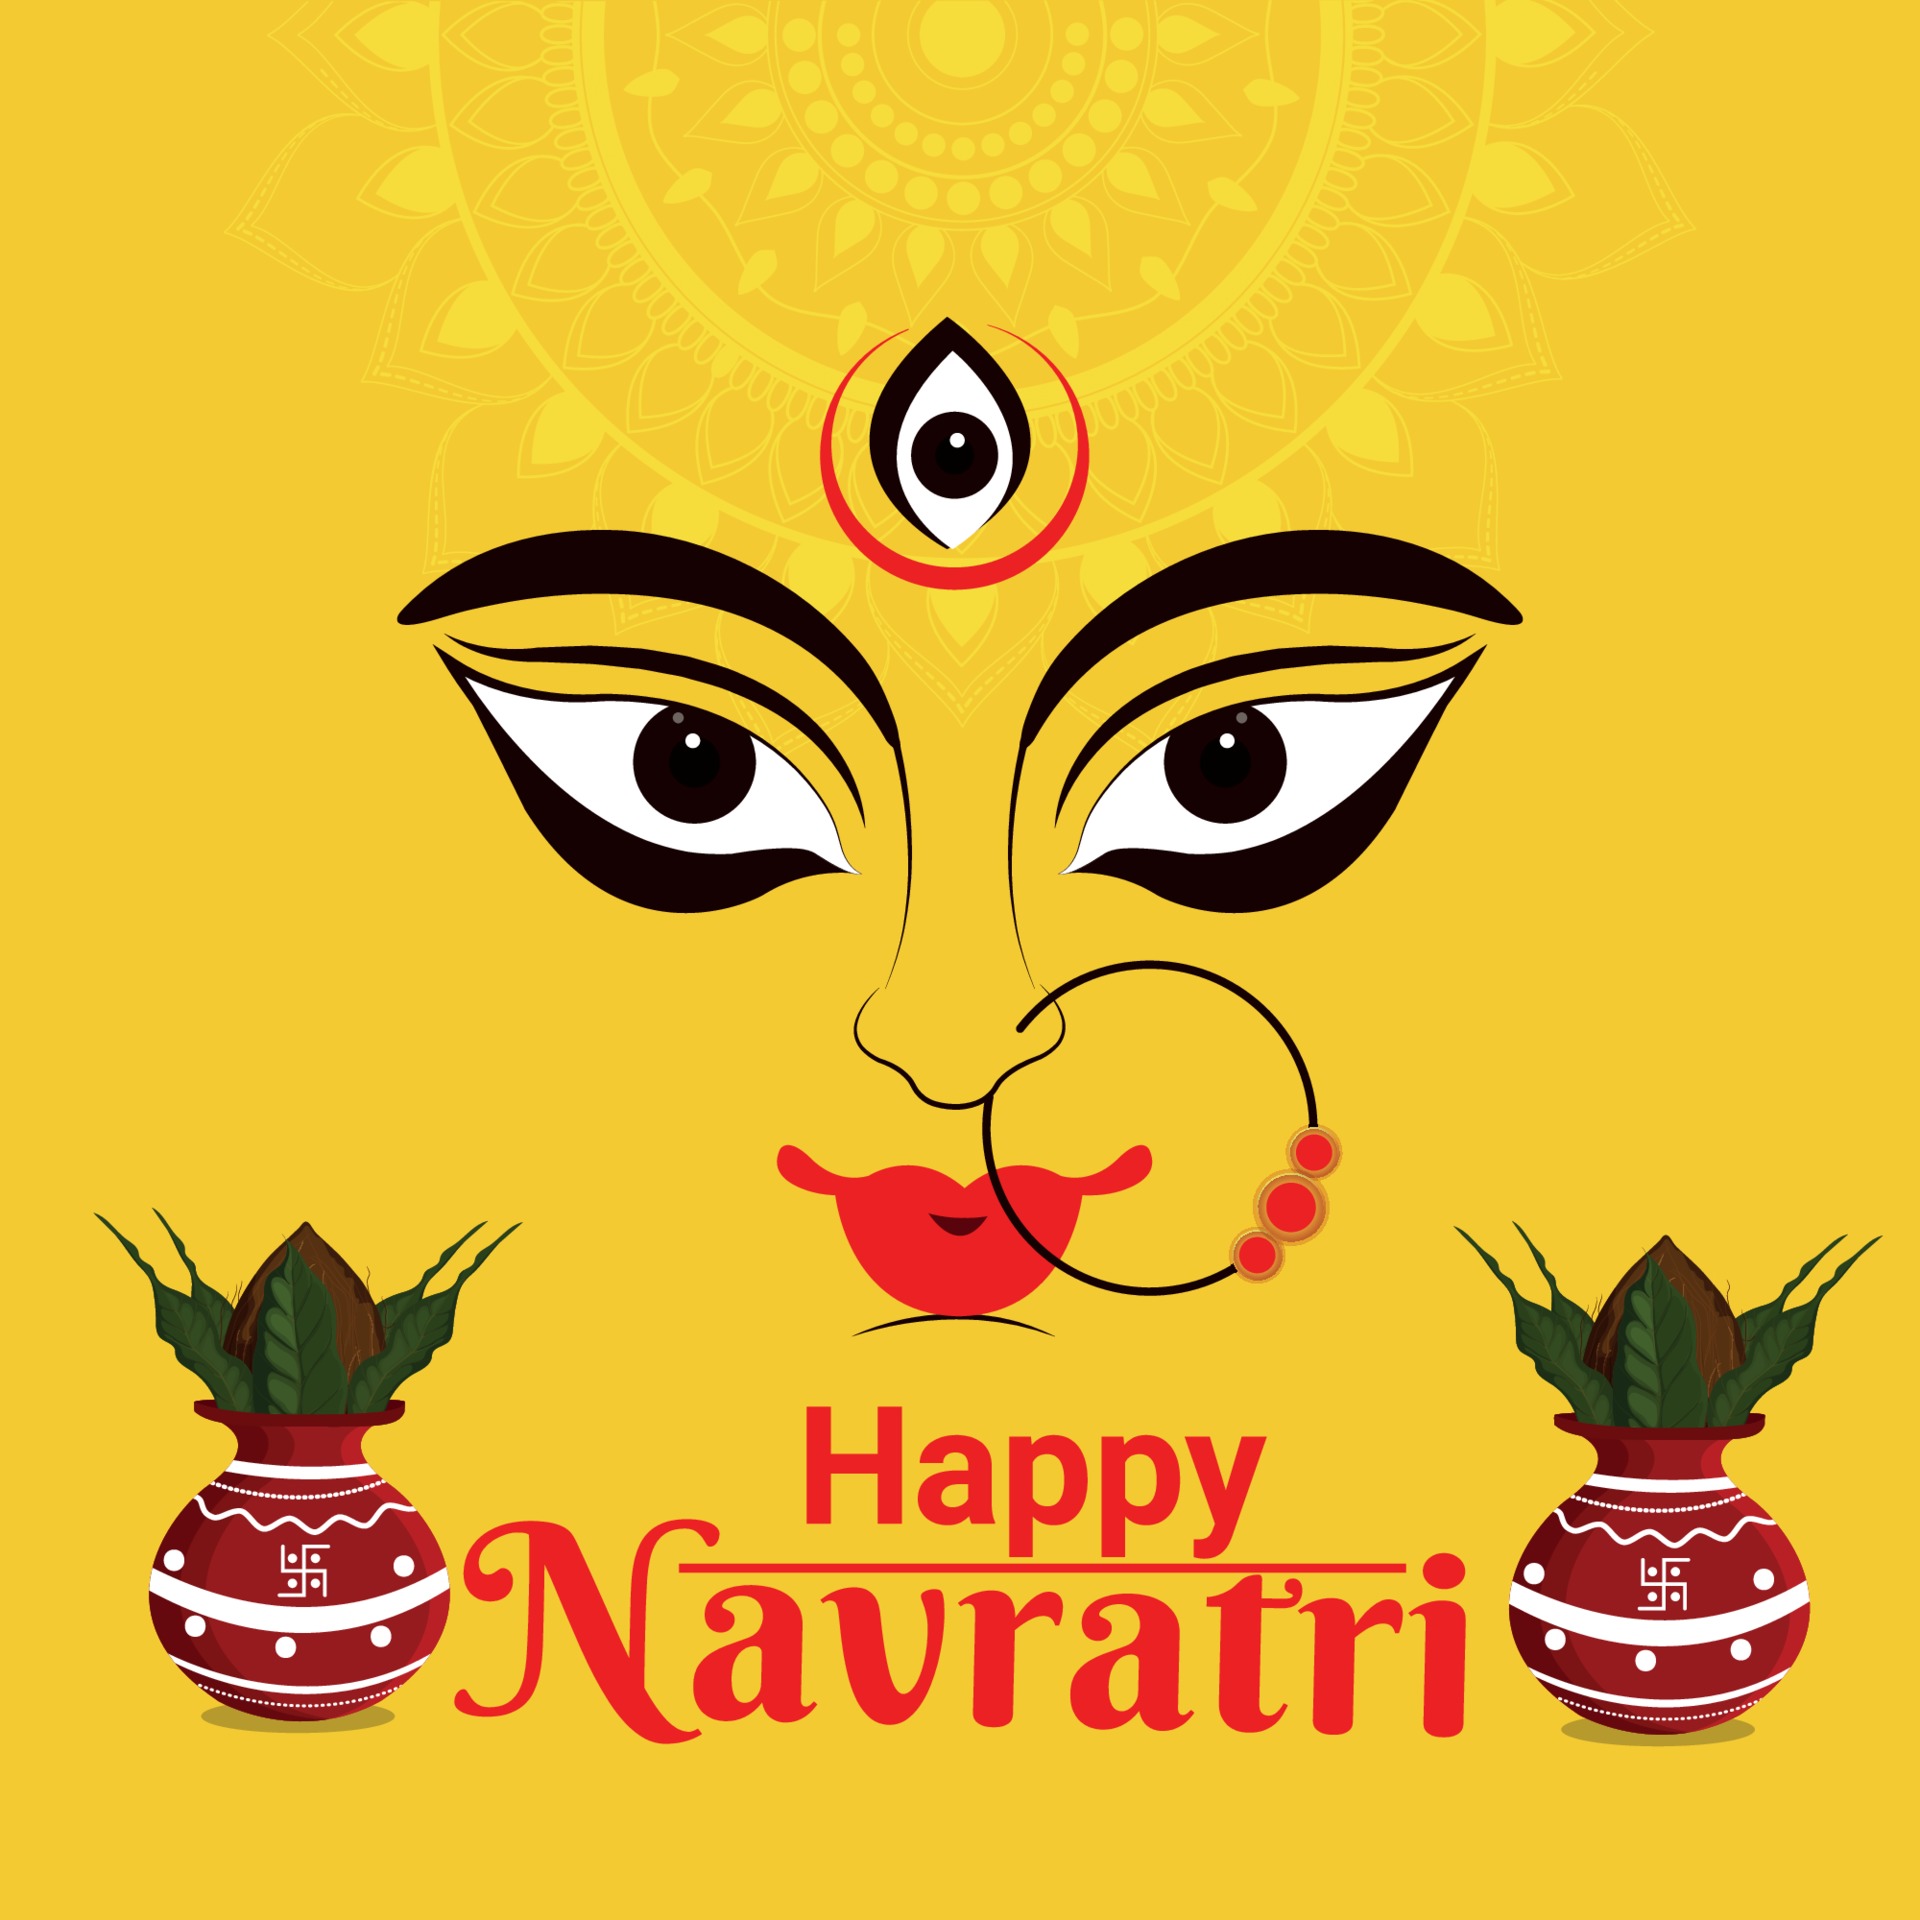 Illustration of happy navratri celebration greeting card 2154853 Vector